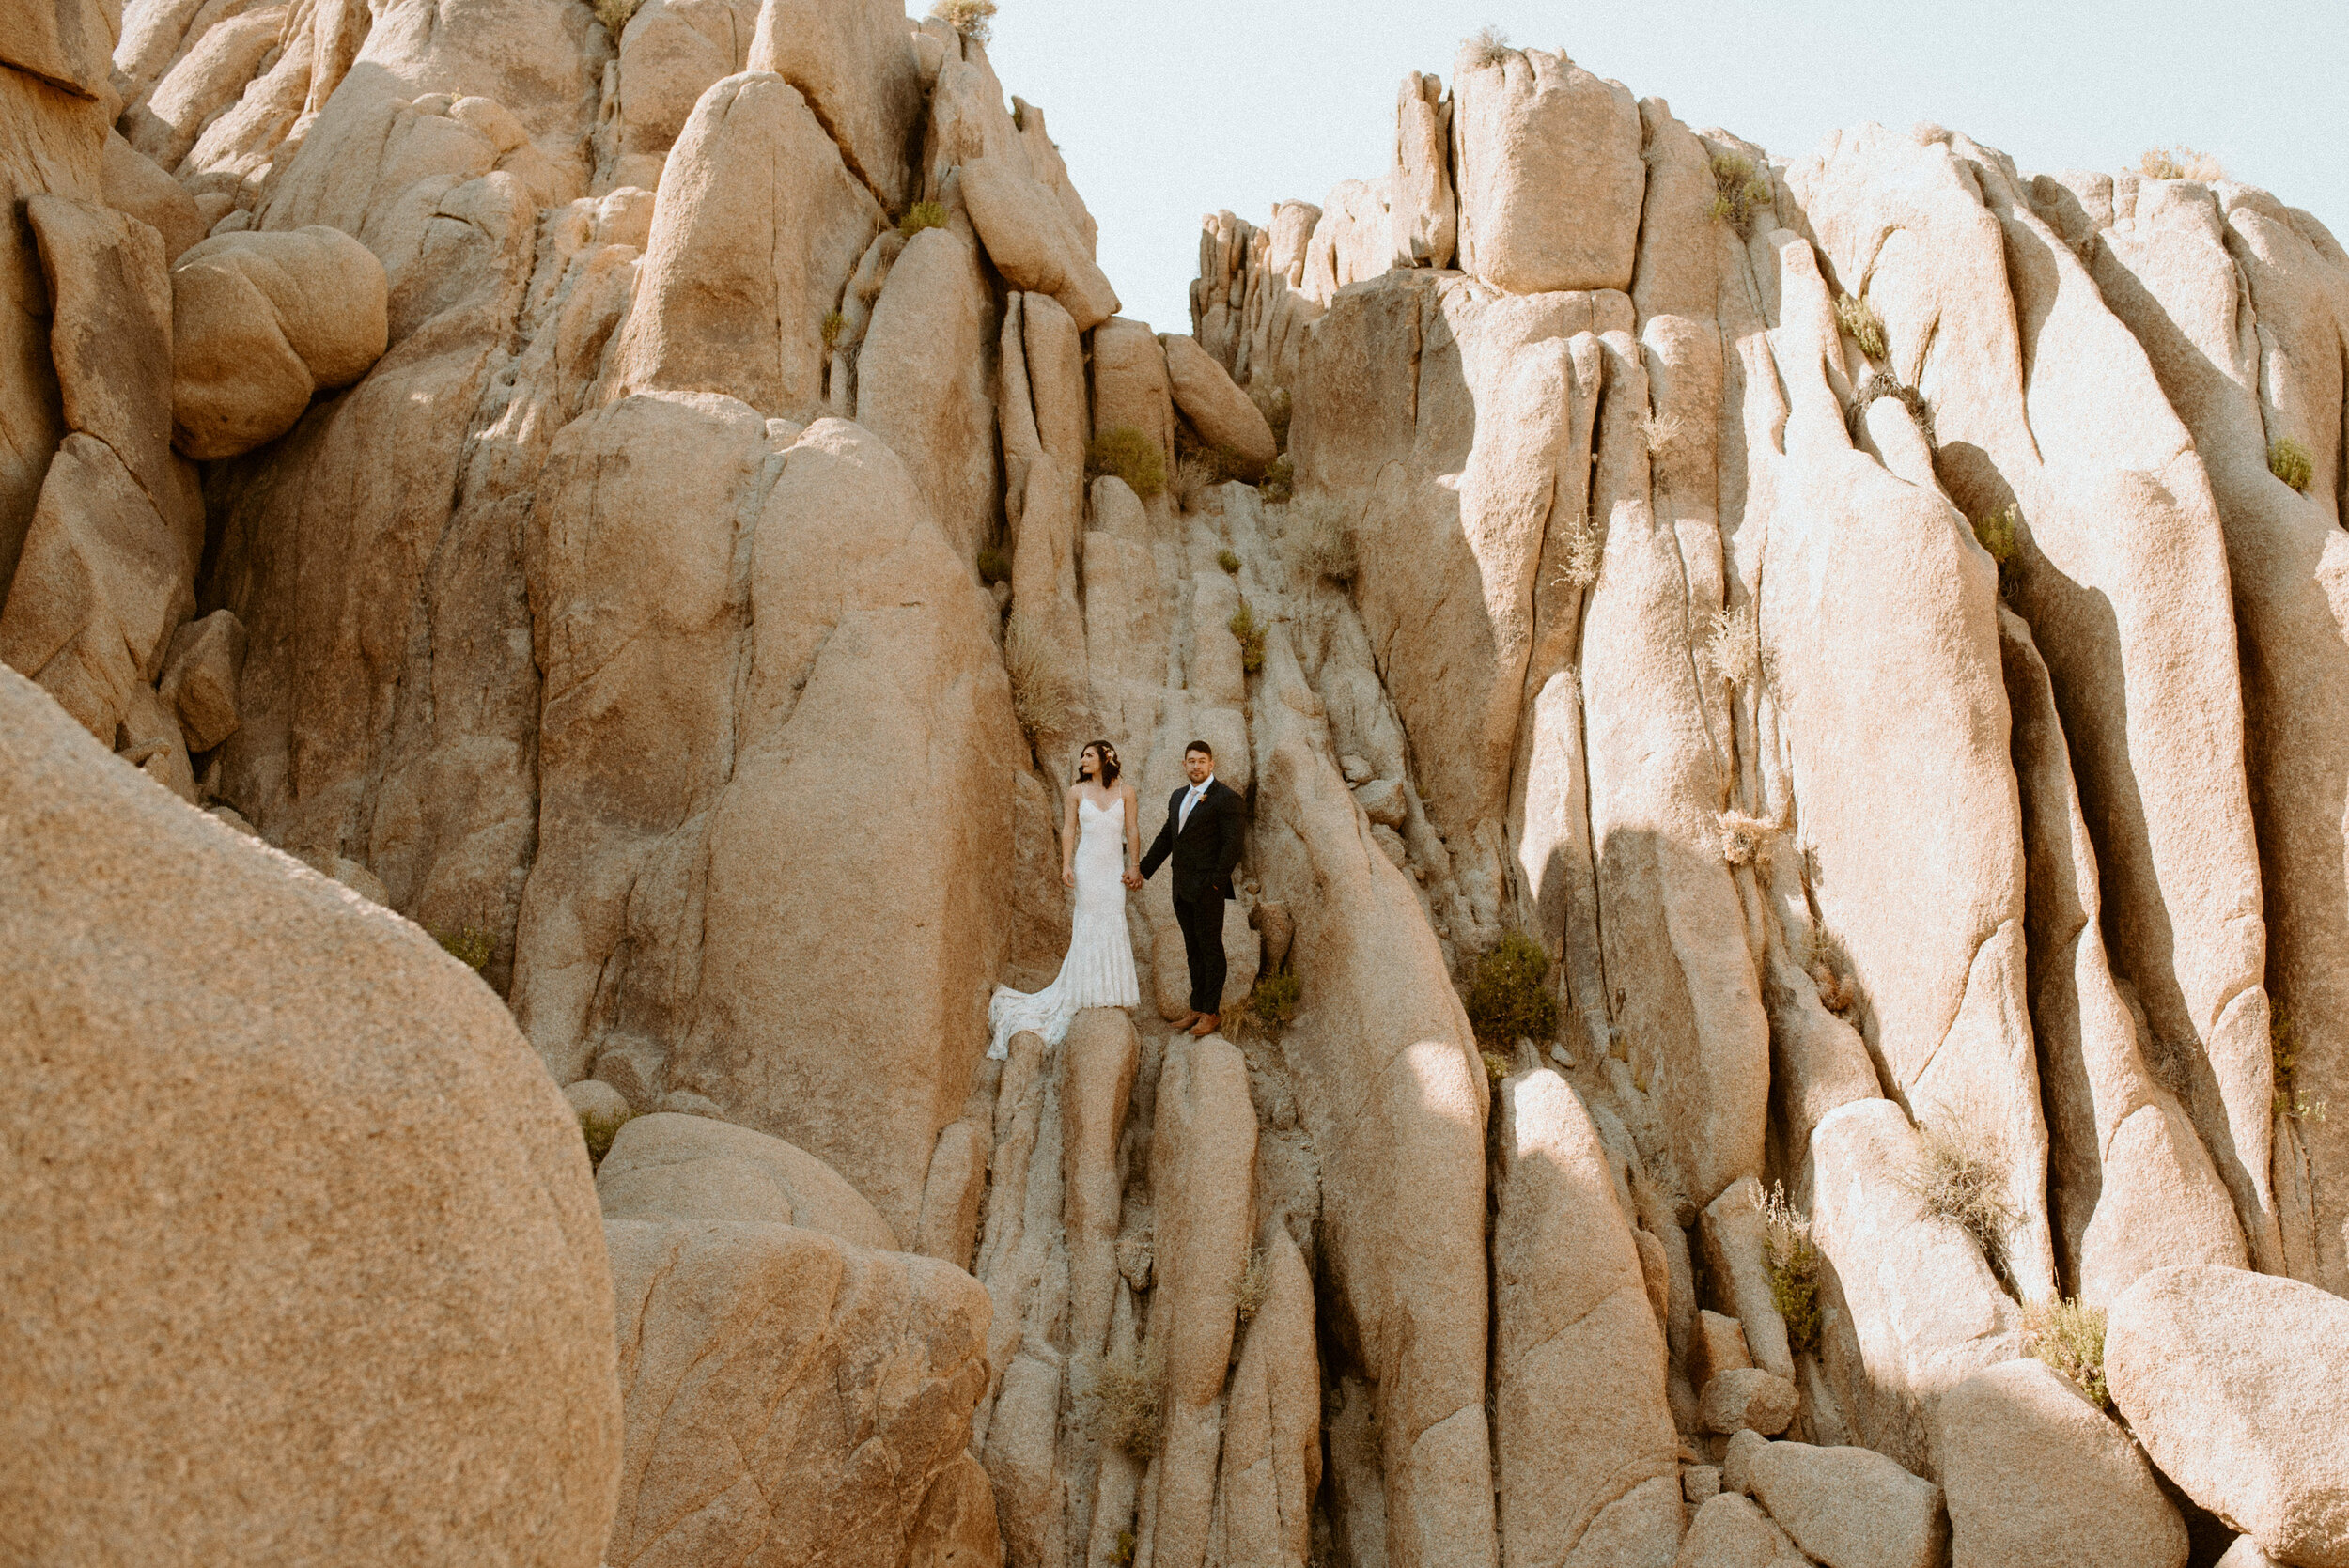 Laid-back Joshua Tree elopement | Boho bride in Grace Loves Lace dress | Joshua Tree elopement photographer | adventurous desert elopement | best place to elope in california